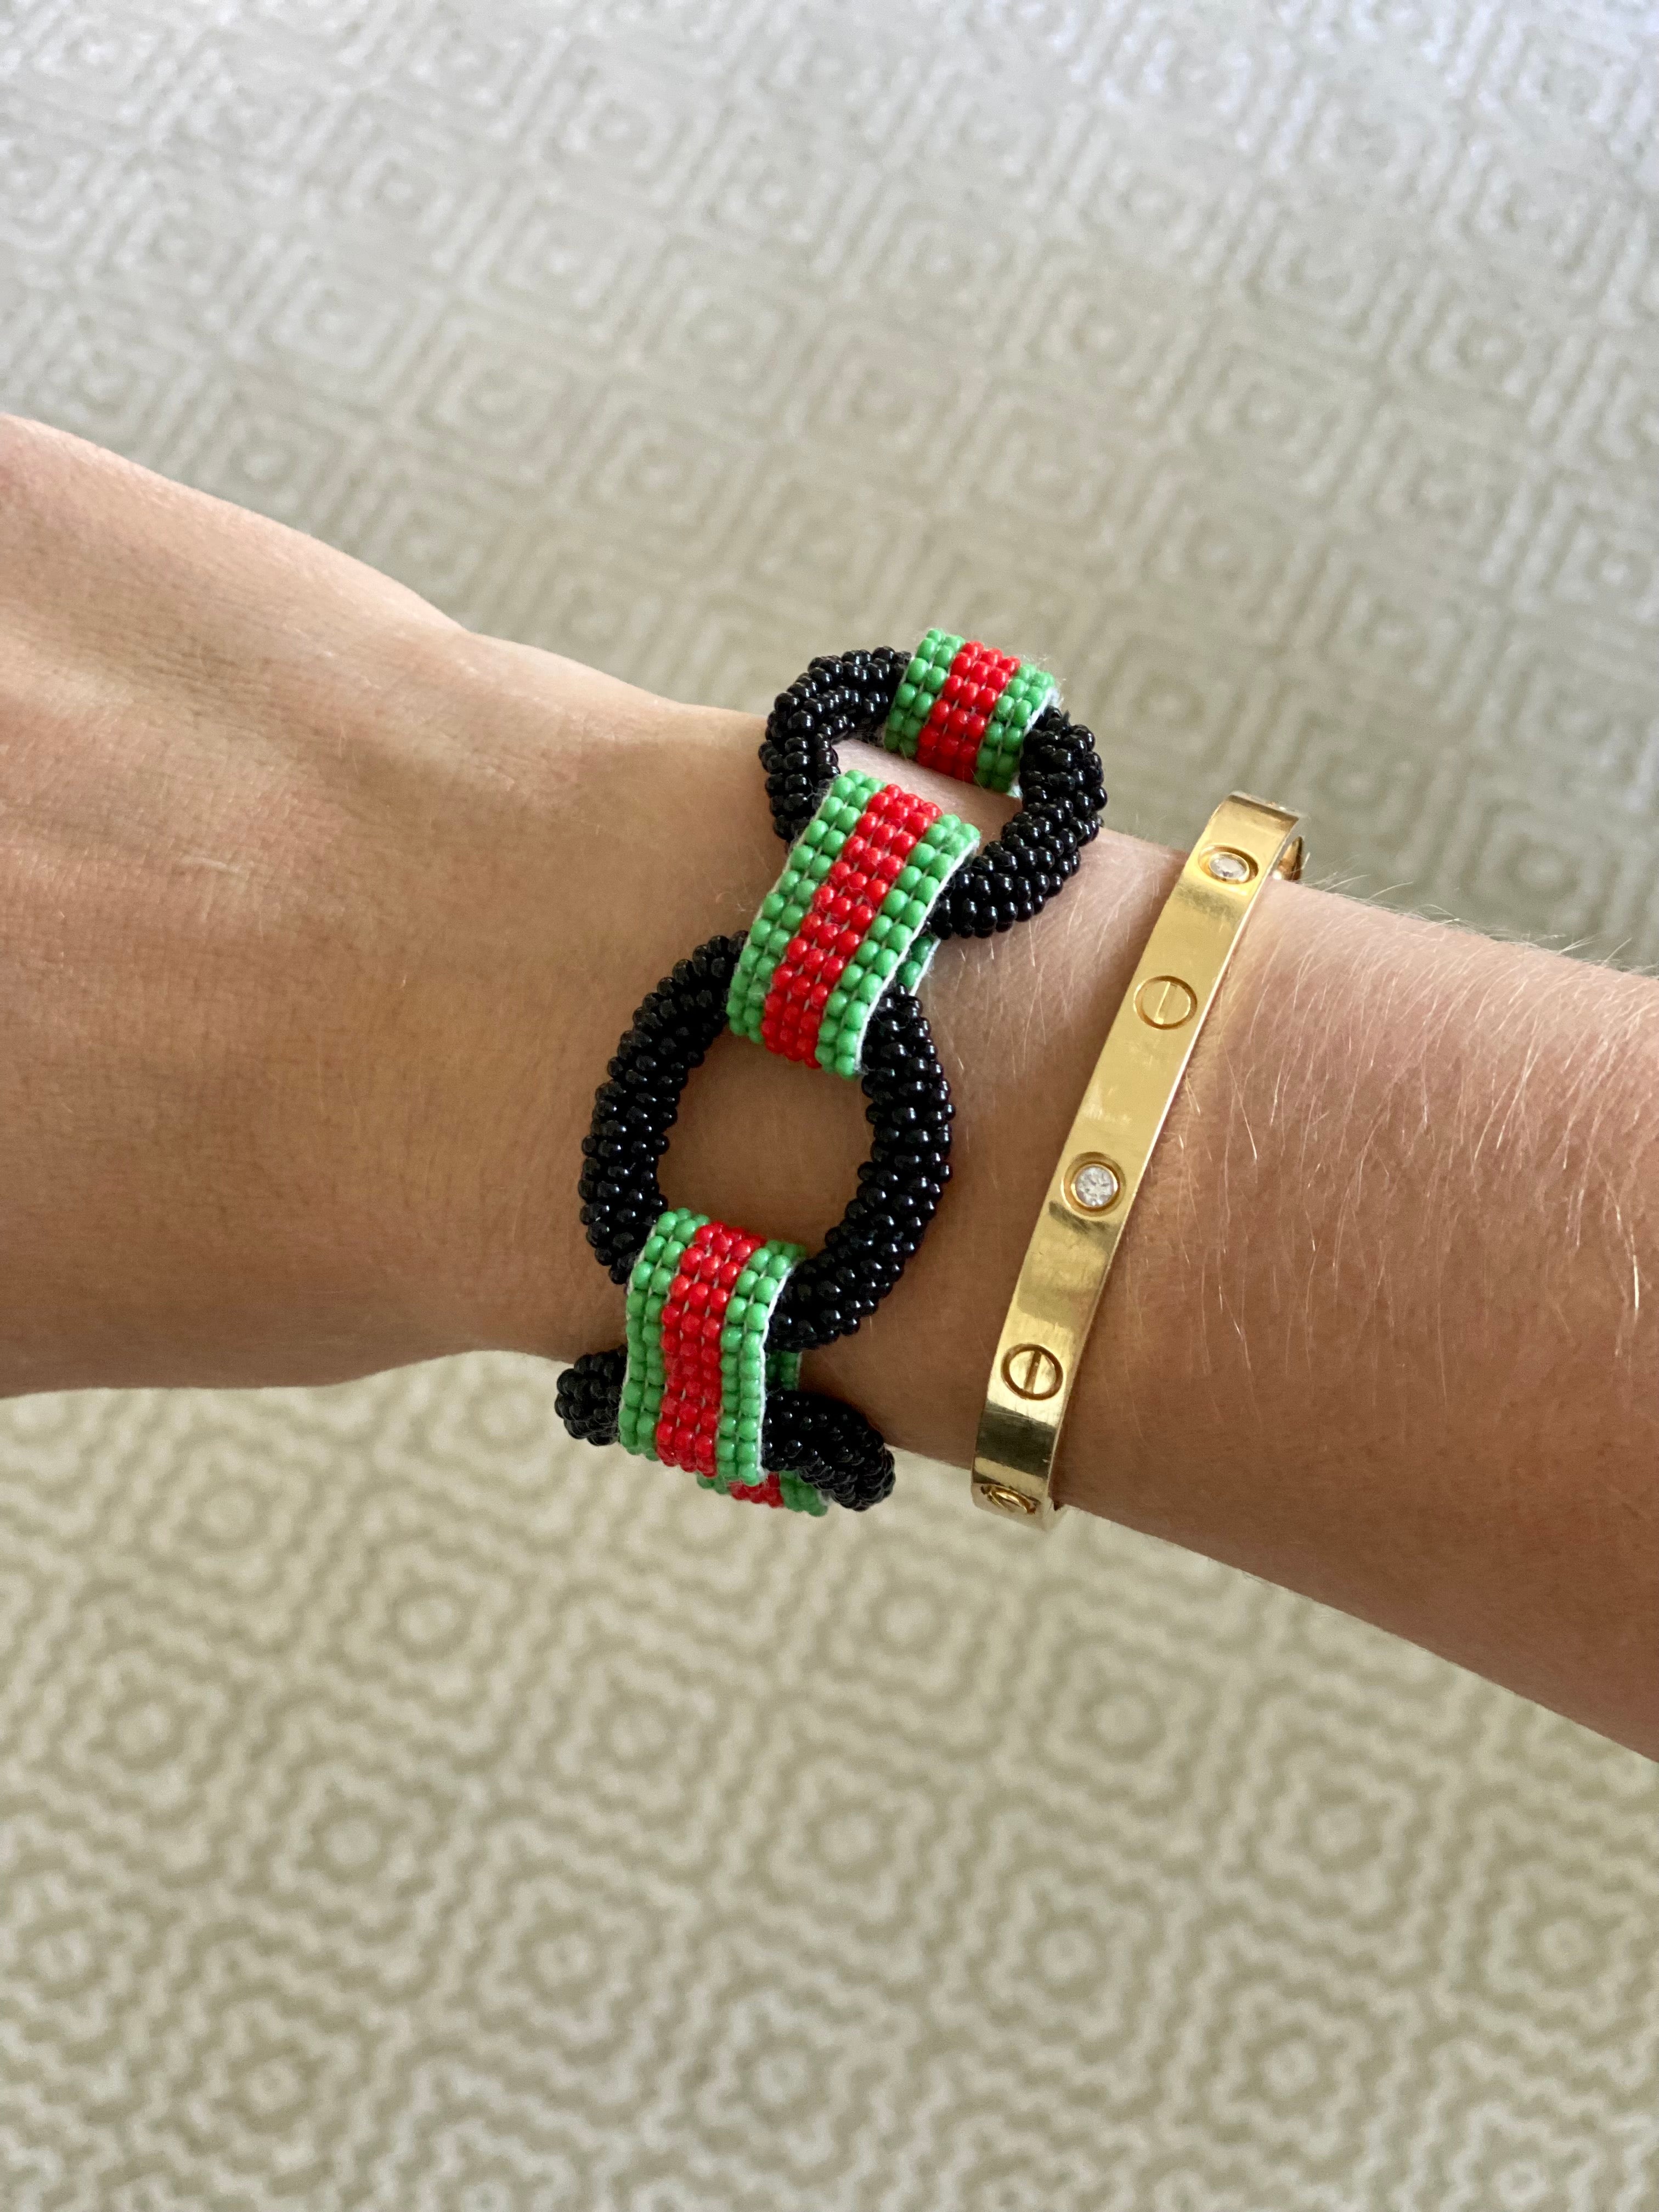 Links Bracelet in Black/Red/Green